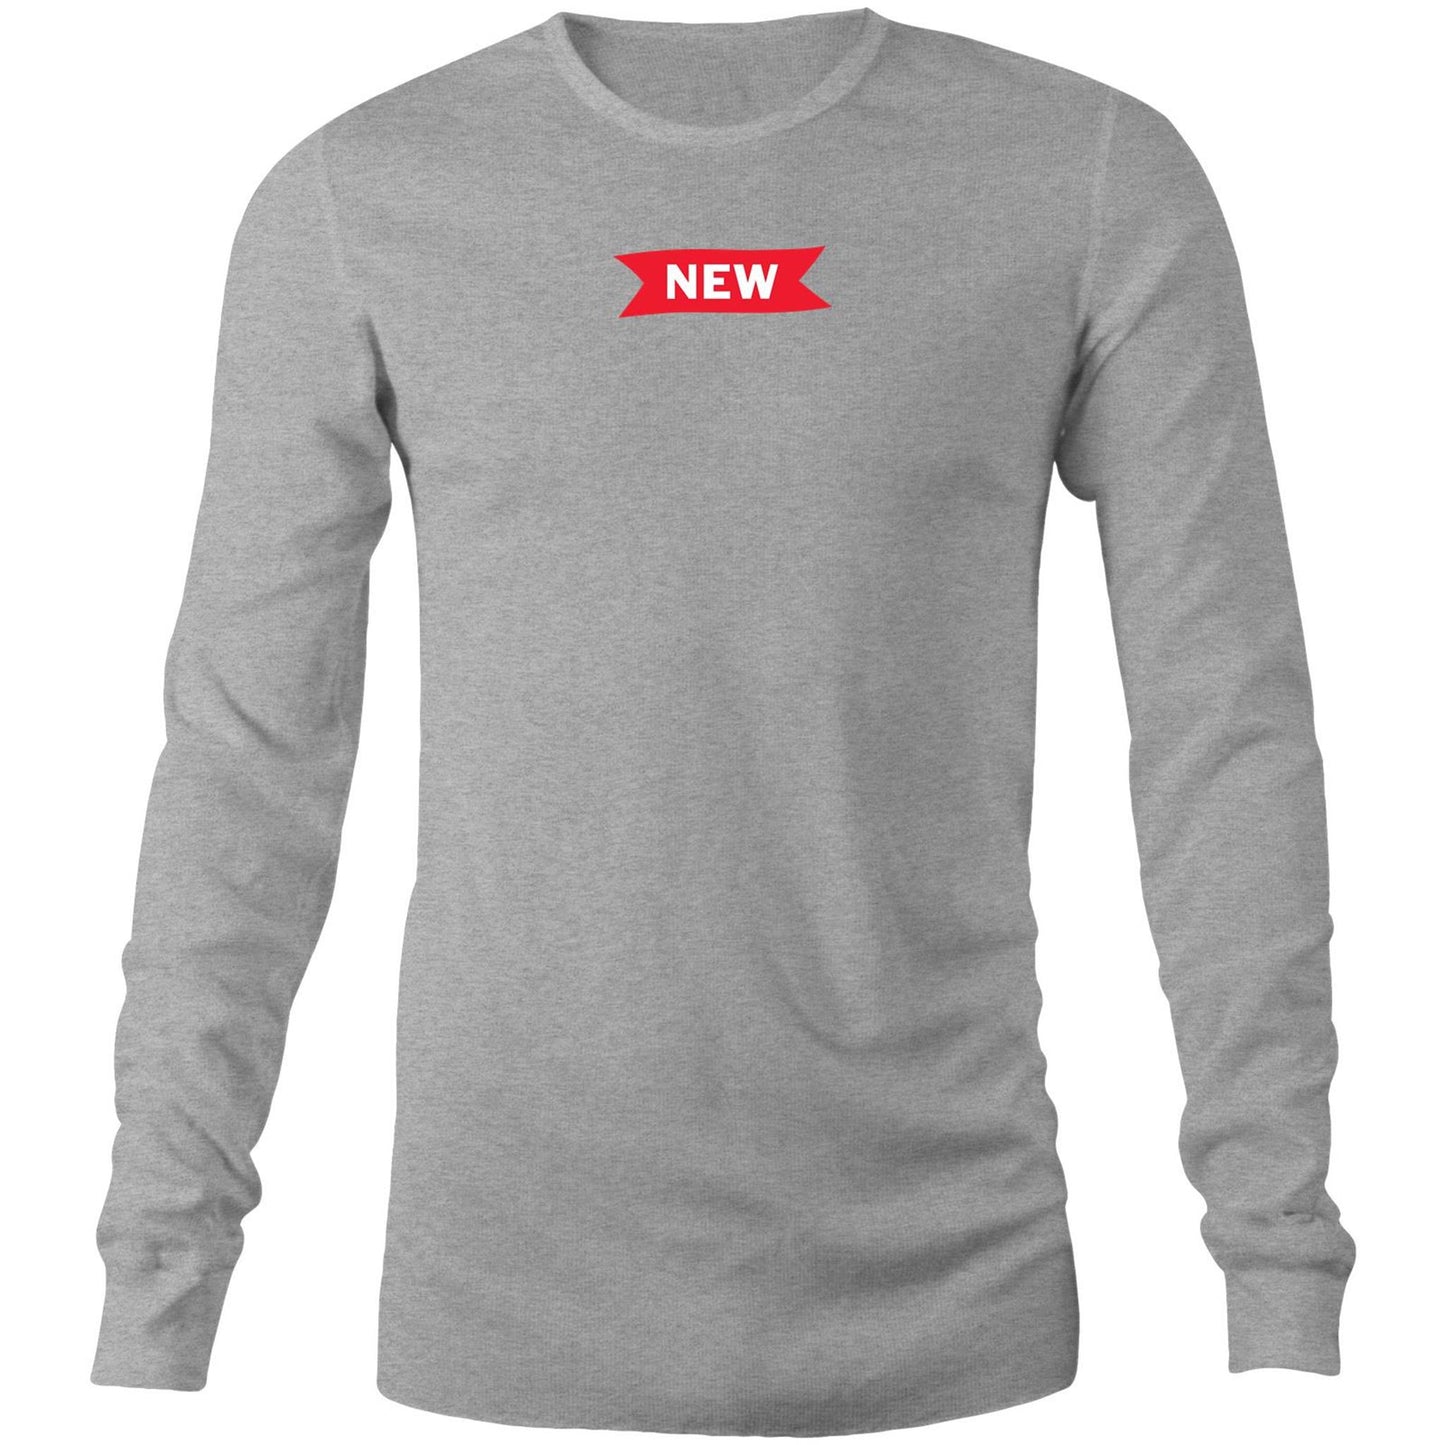 NEW Long Sleeve T Shirts